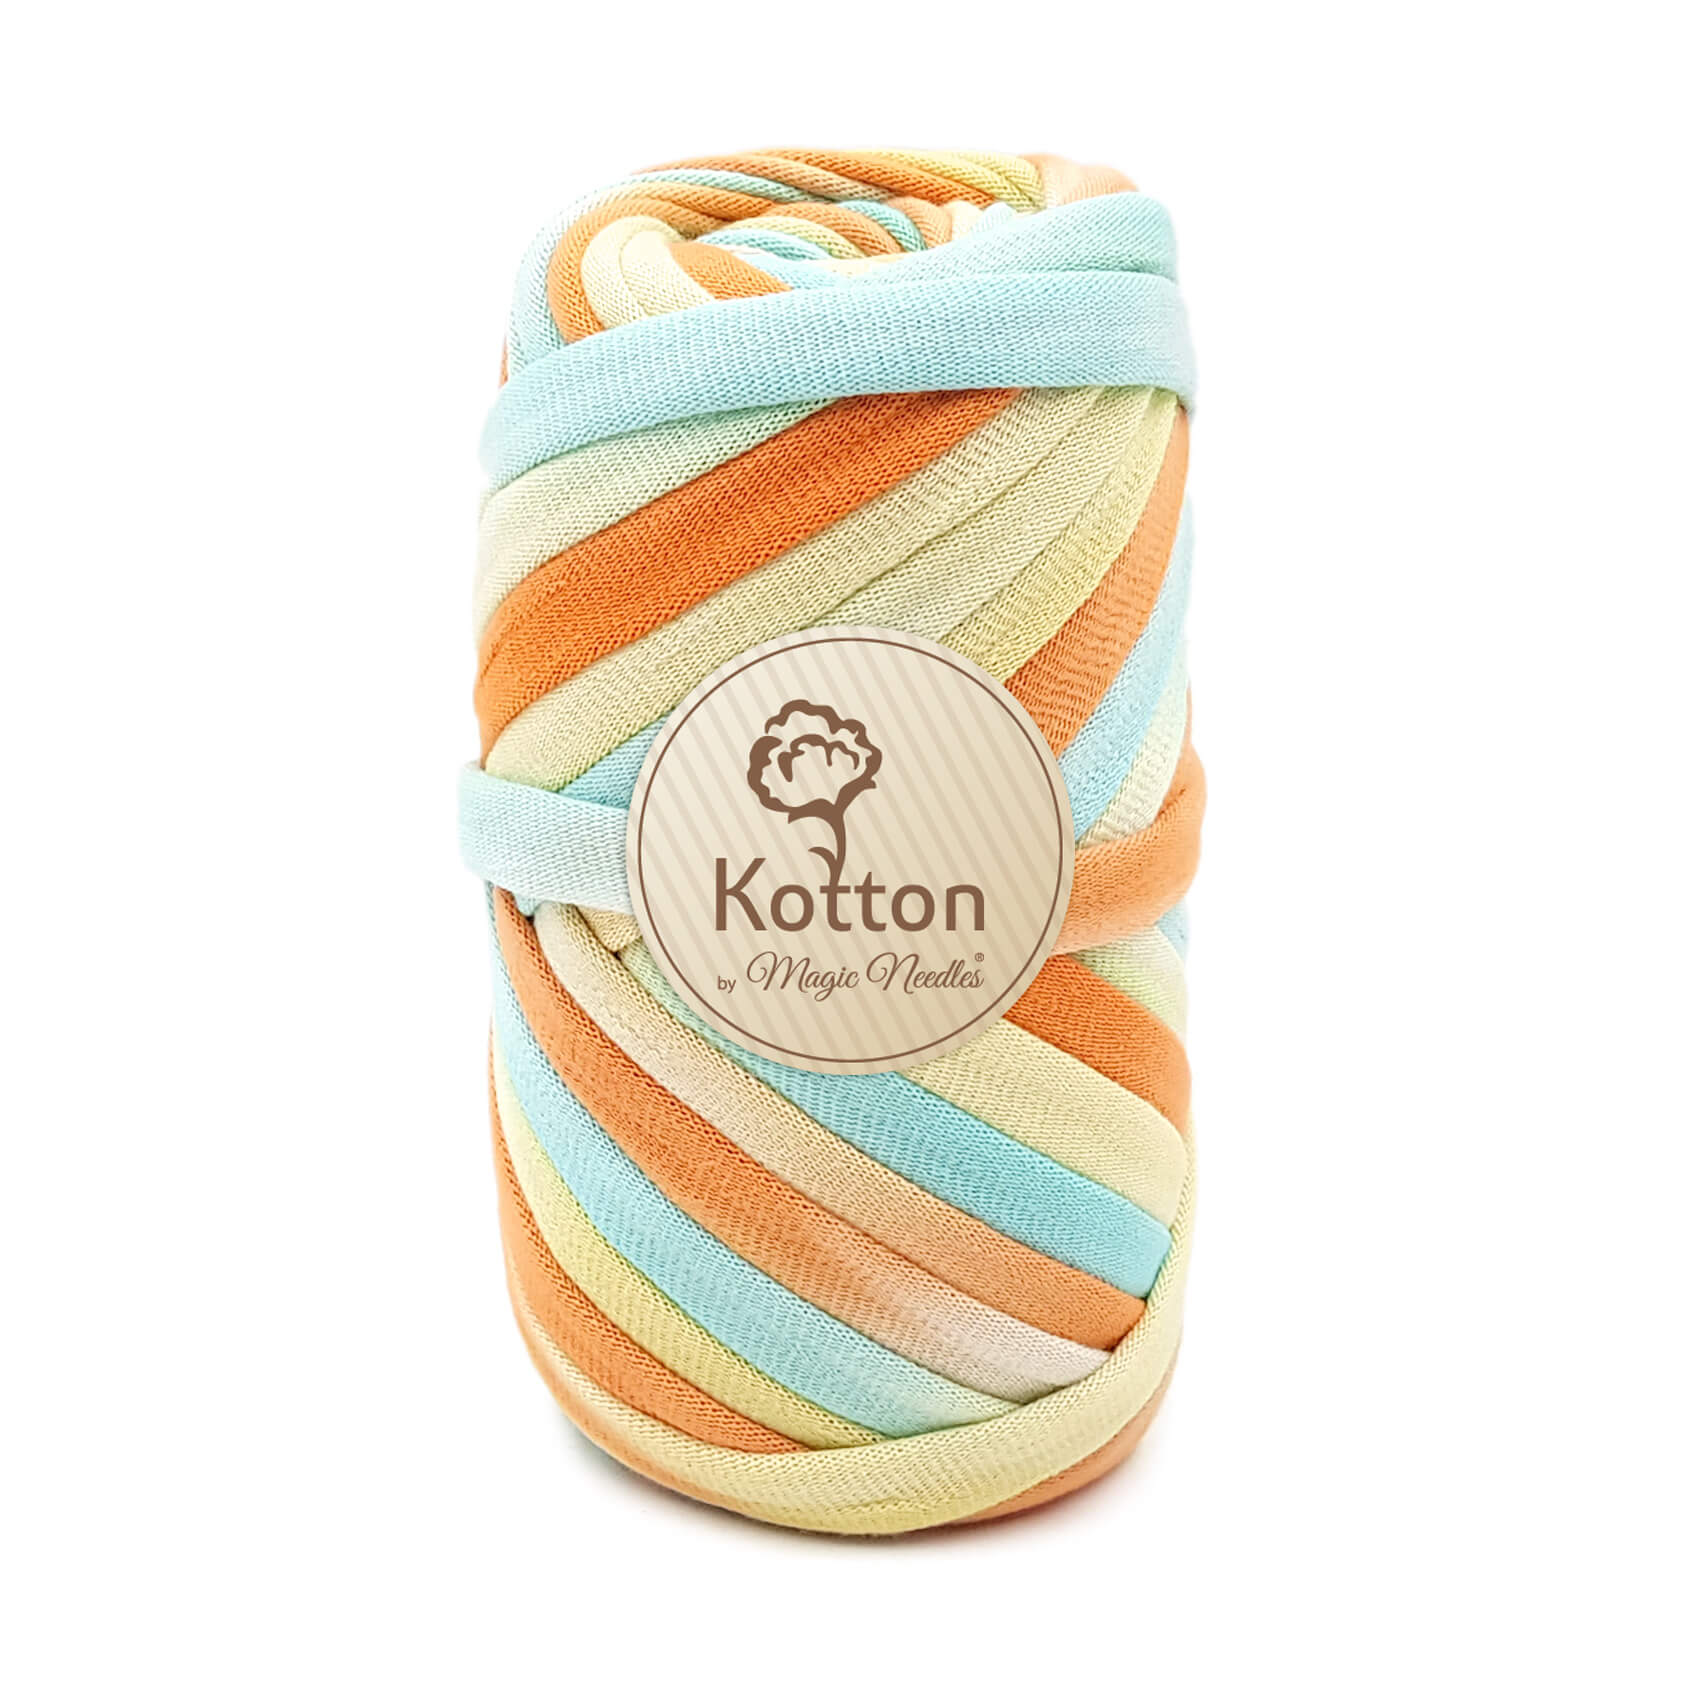 Kotton T-Shirt Yarn - Multi Color M03